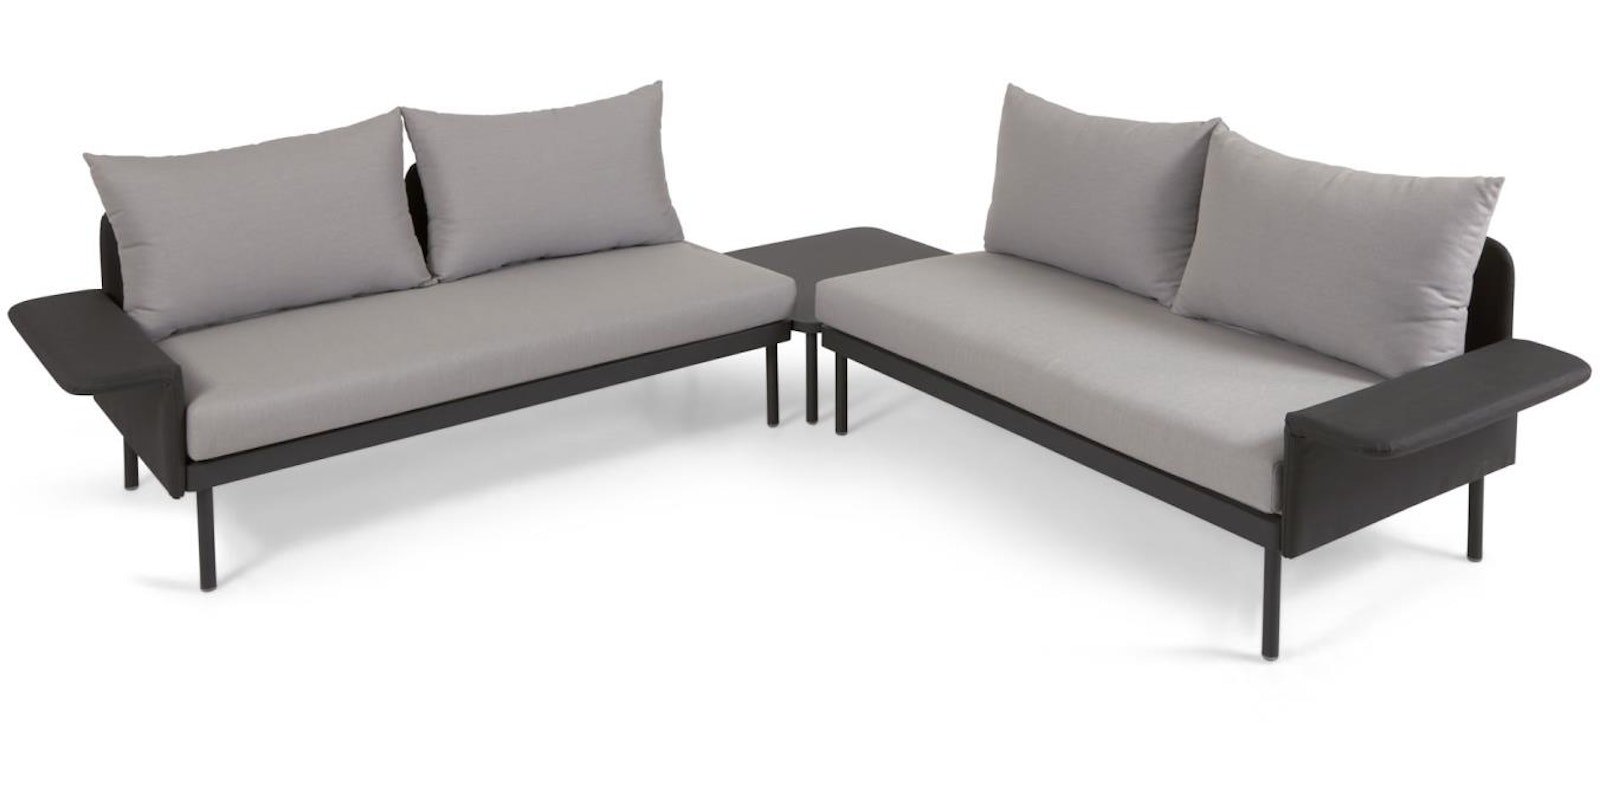 Zaltana, Udendørs sofasæt, Metal, sæt á 2 stk. by LaForma (H: 82 cm. x B: 230 cm. x L: 230 cm., Sort)